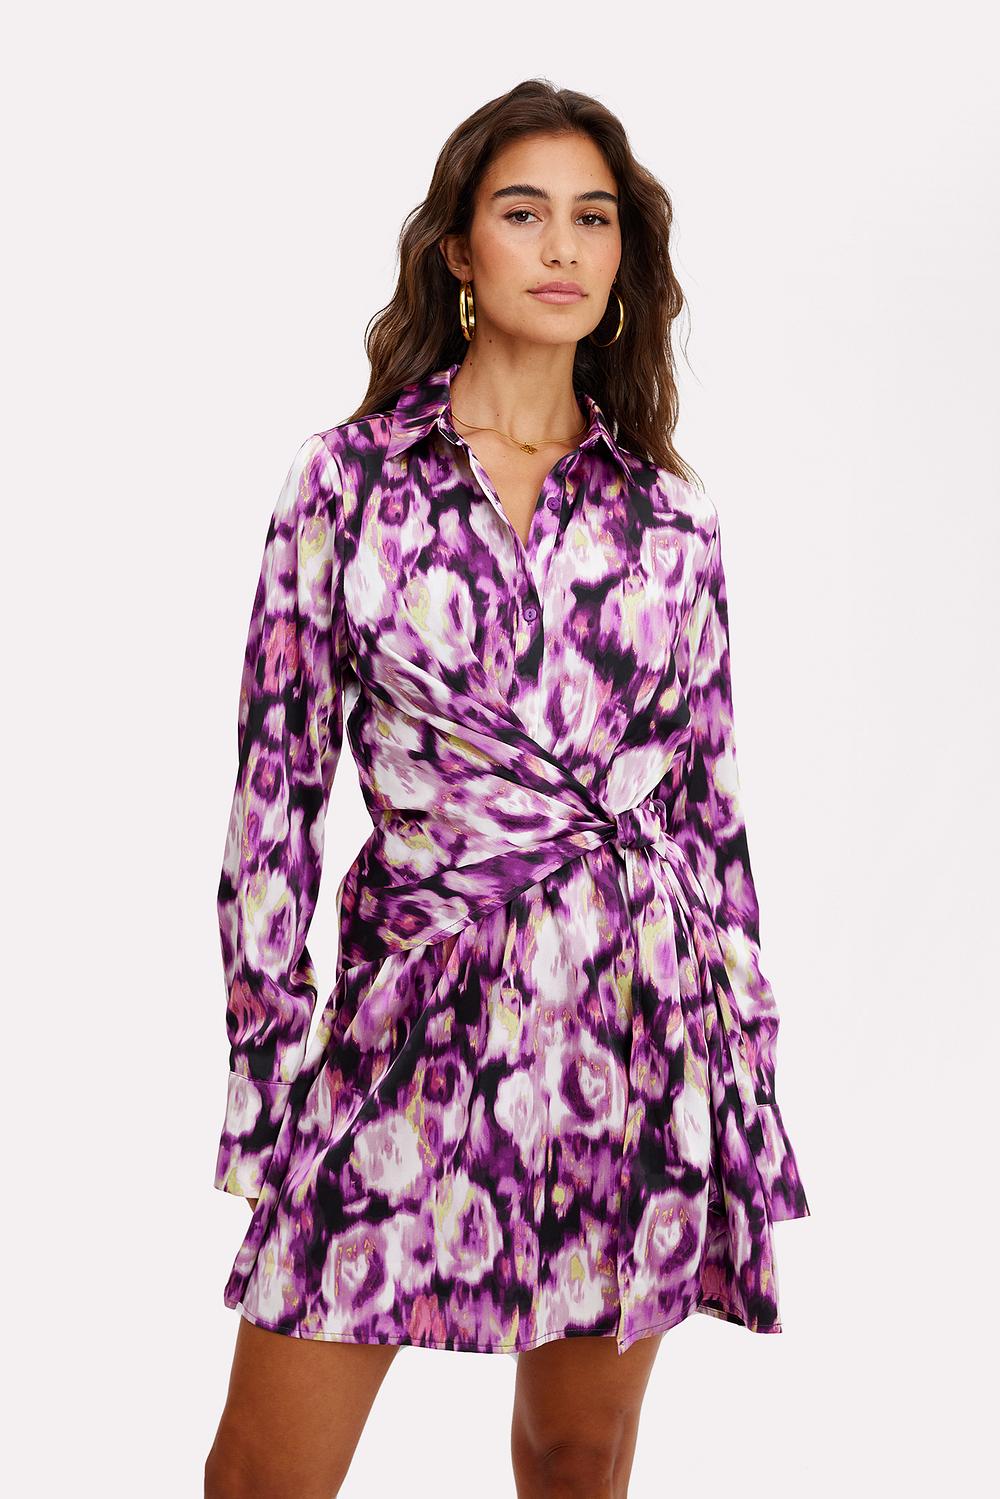 Purple dress with graphic print